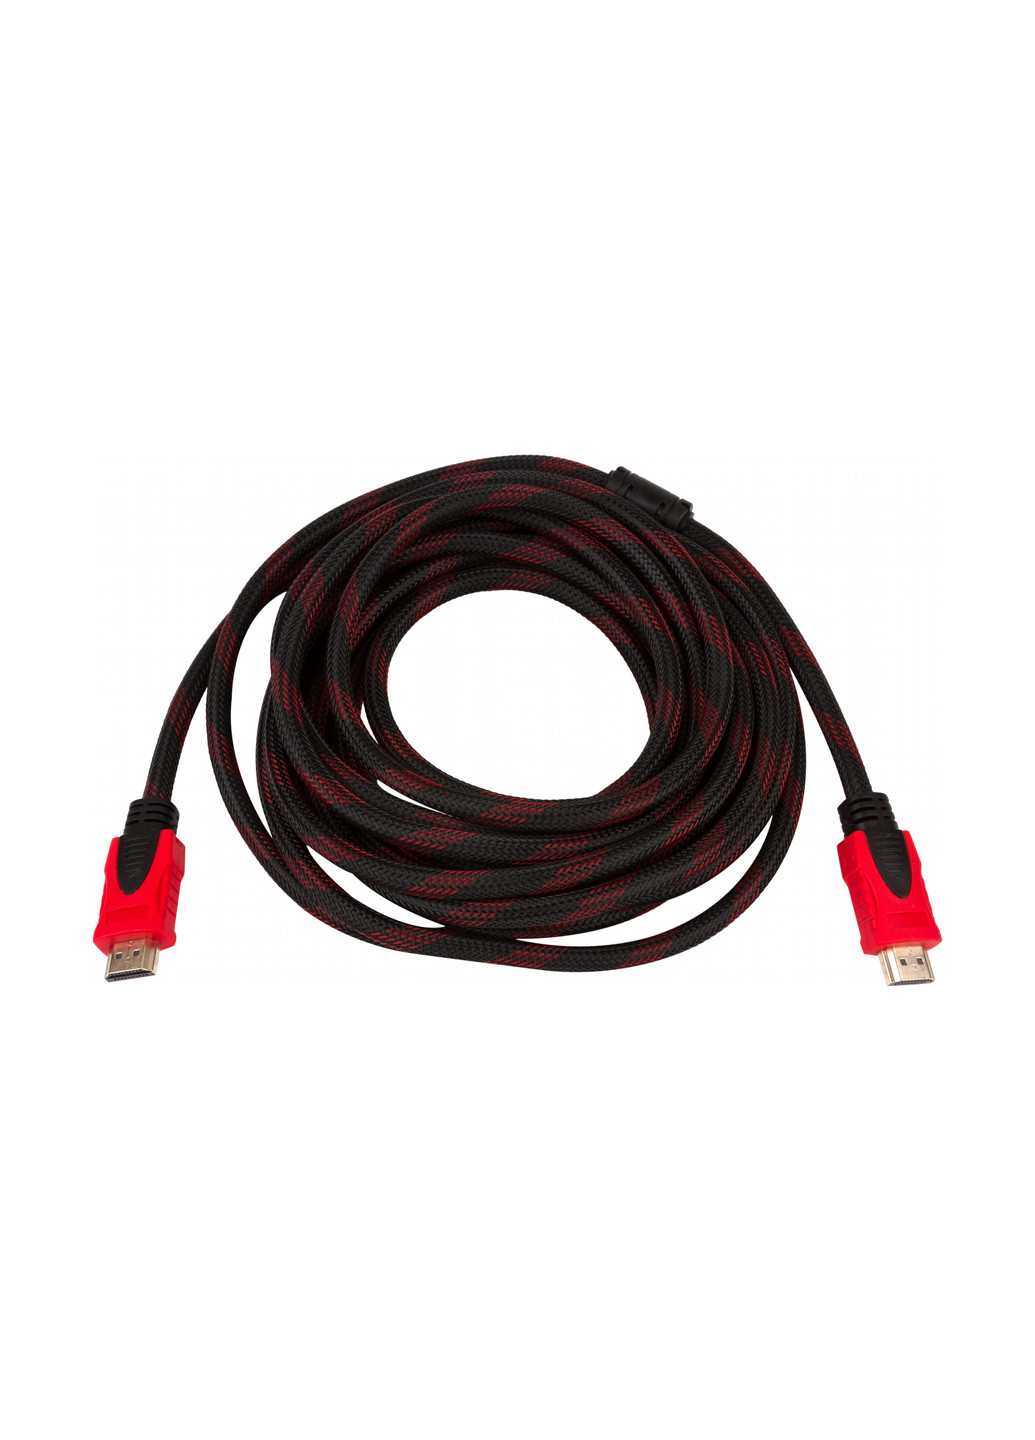 Кабель HDMI copper 1.4 v, 10 м (700100) CHARMOUNT кабель charmount hdmi copper 1.4 v, 10 м (700100) (145607400)